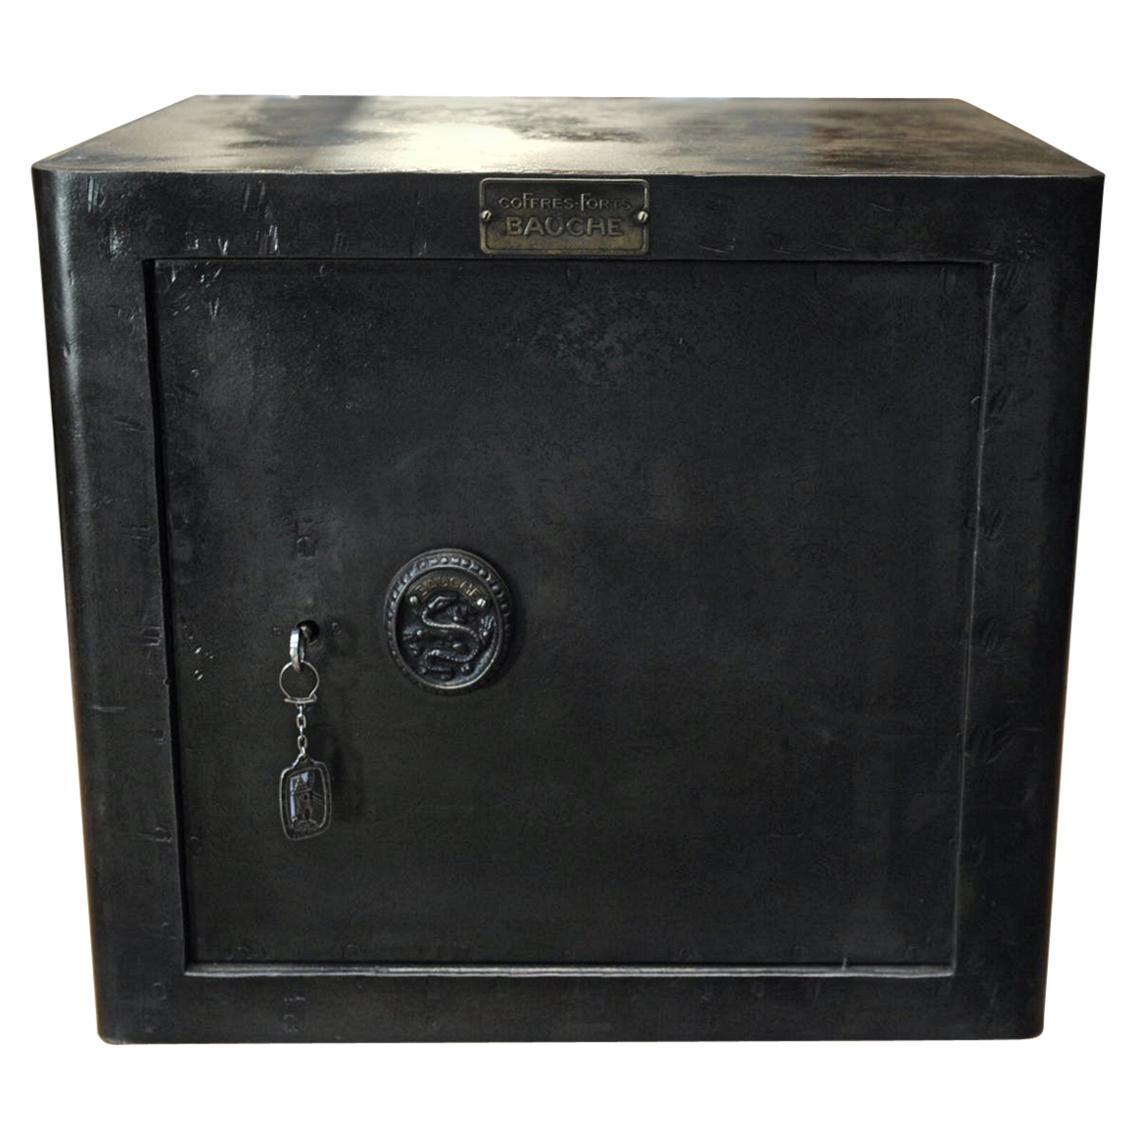 Bauche Metal Safe with Original Key, 1920s